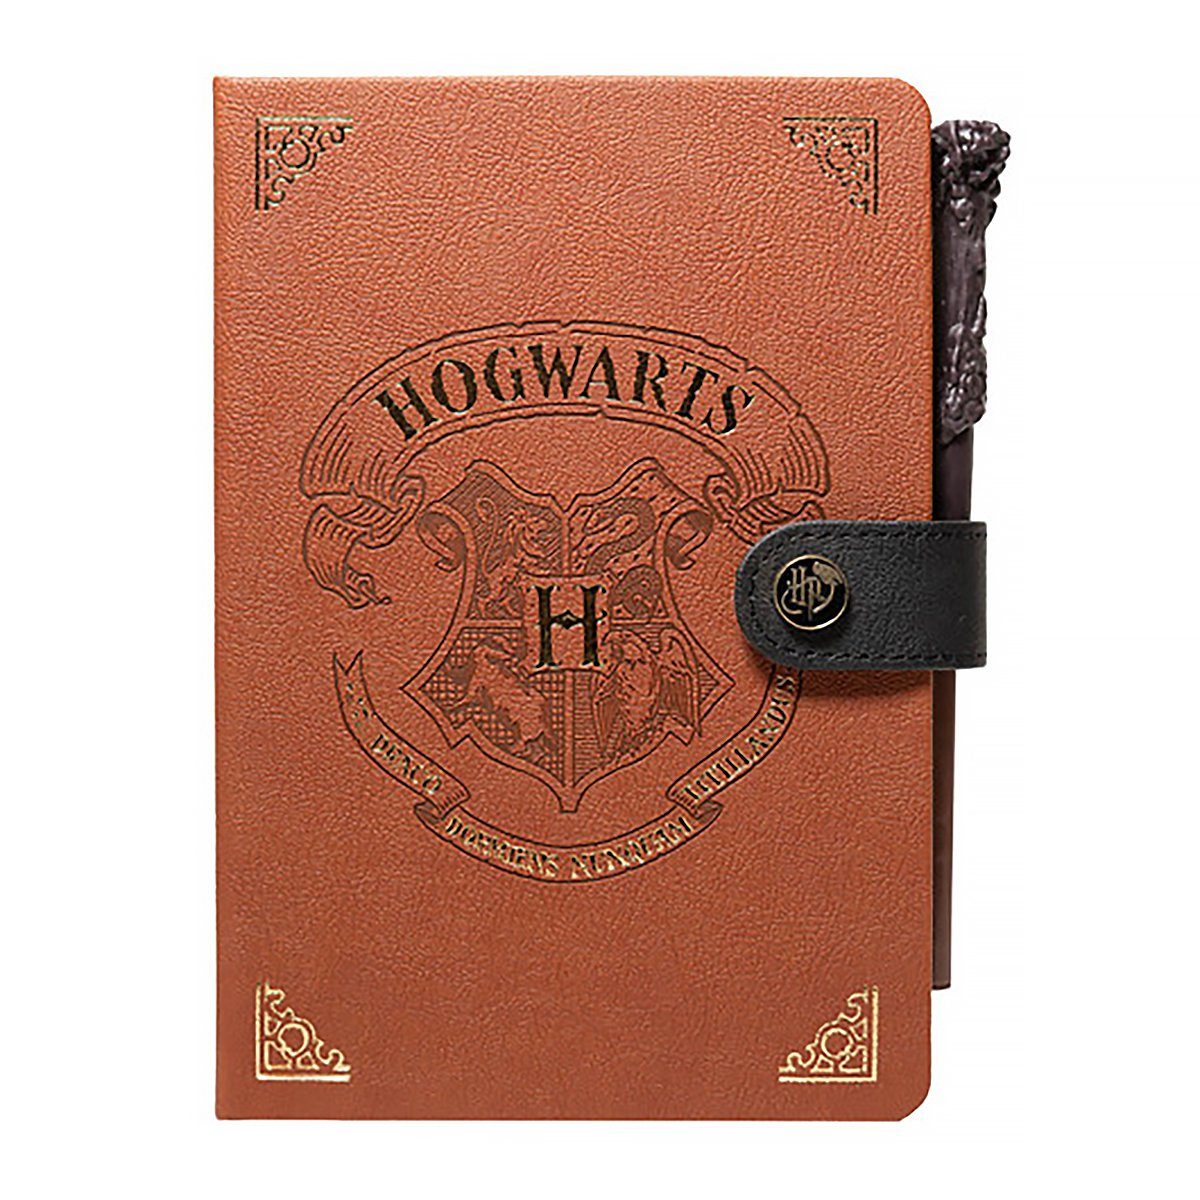 Harry Potter - Slytherin - Notizbuch mit Stift für 19,90 € - Notizbuch